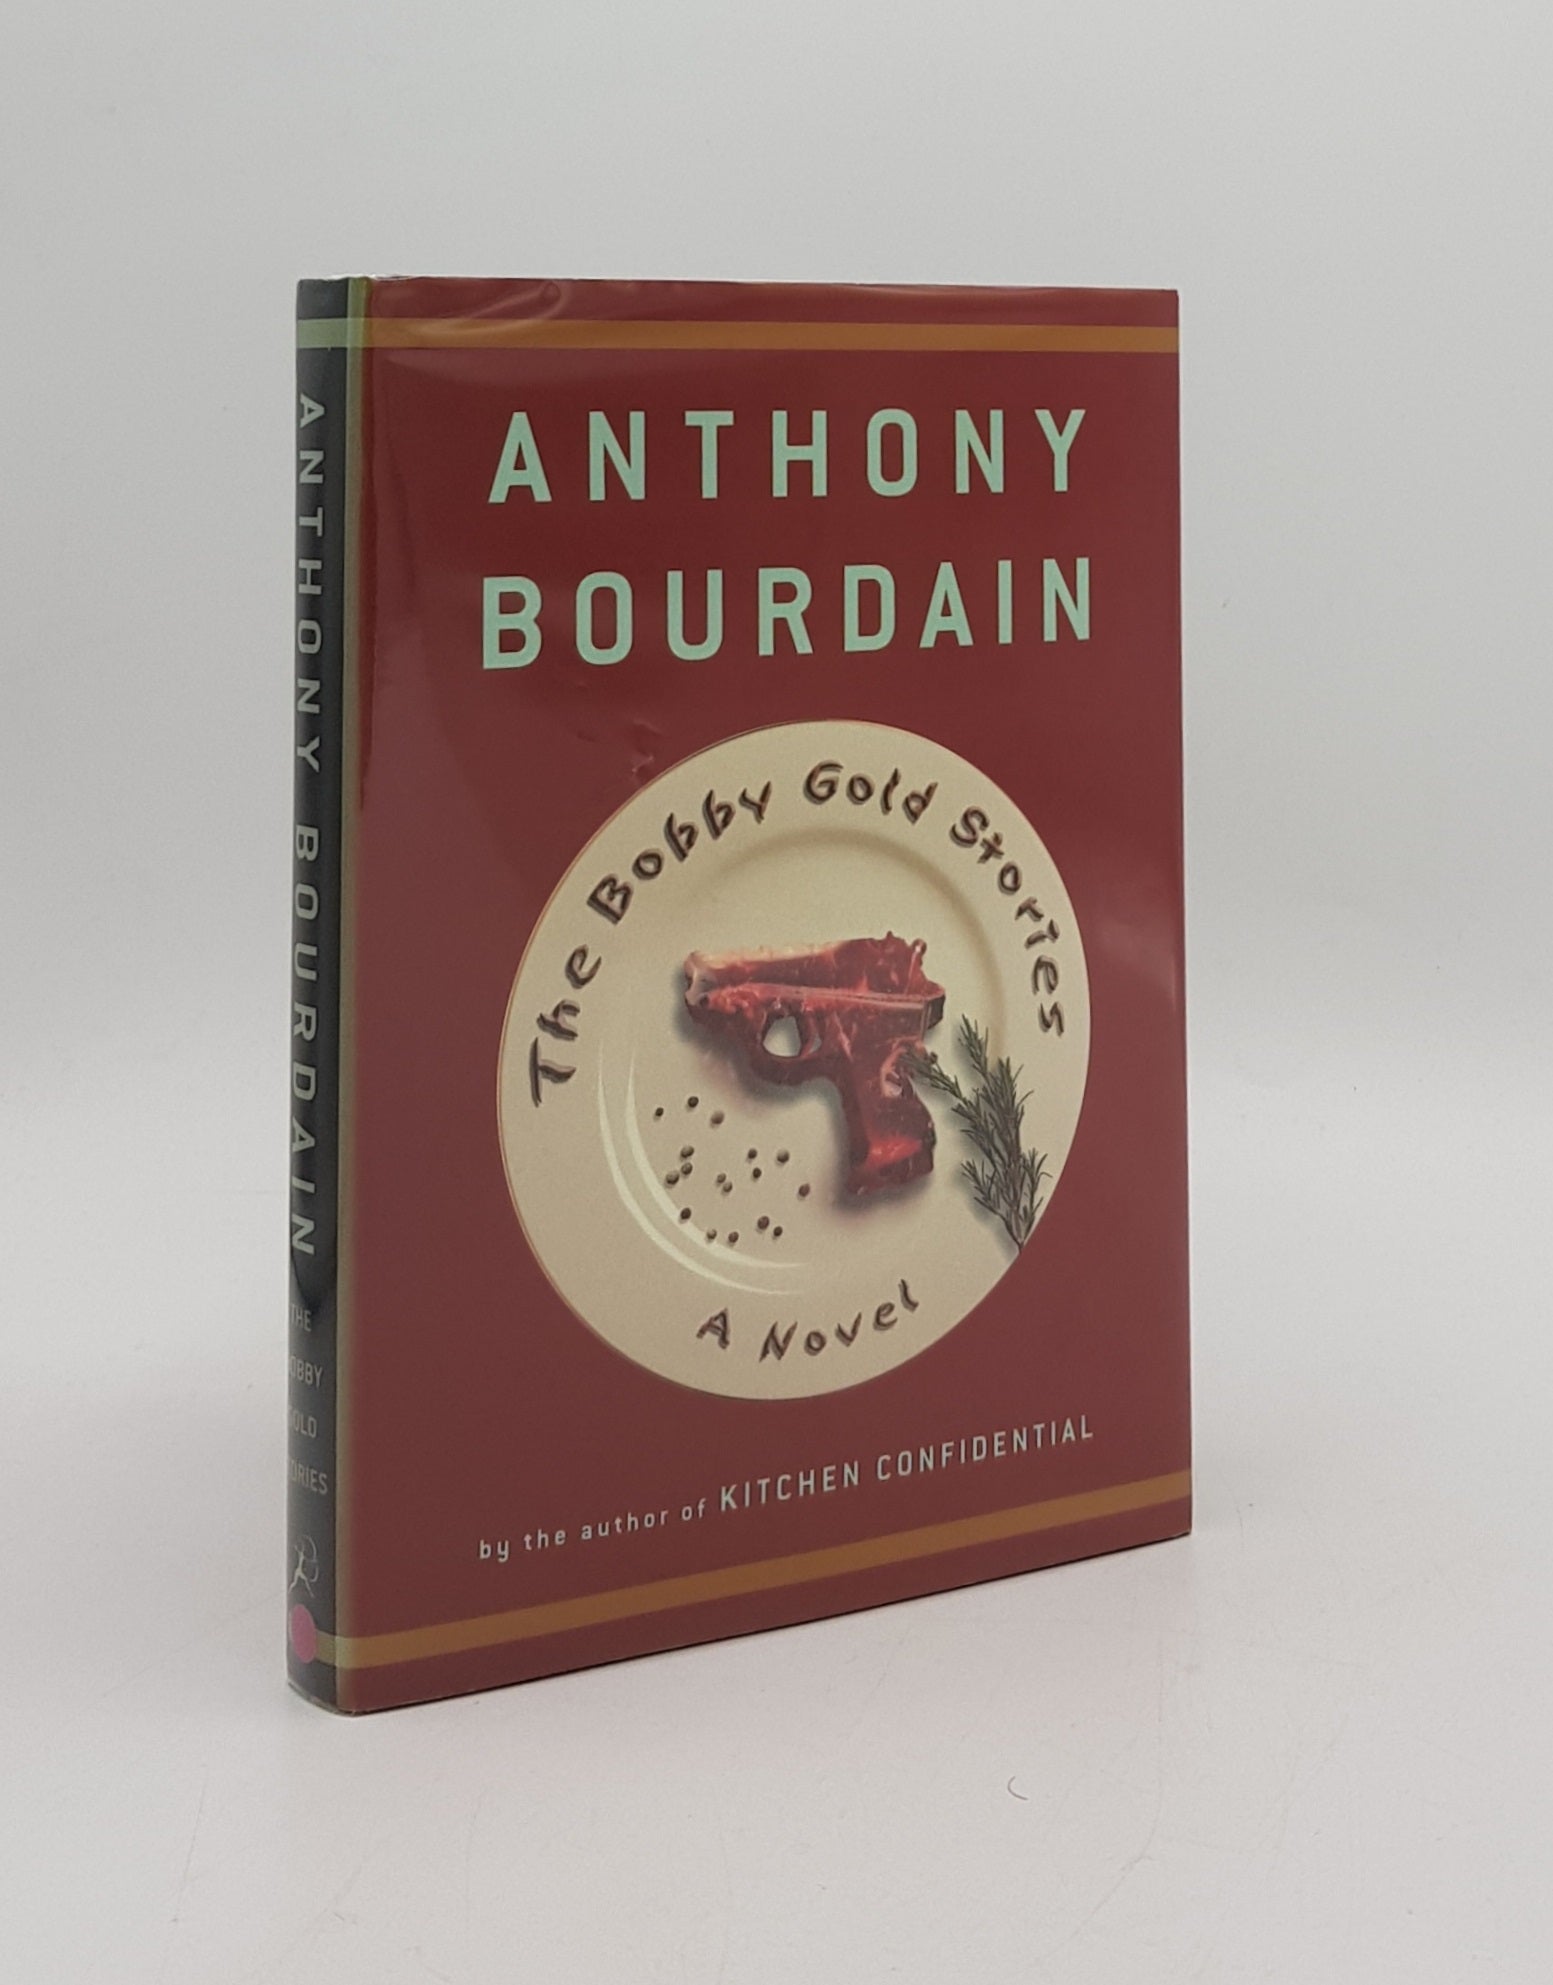 BOURDAIN Anthony - The Bobby Gold Stories a Novel